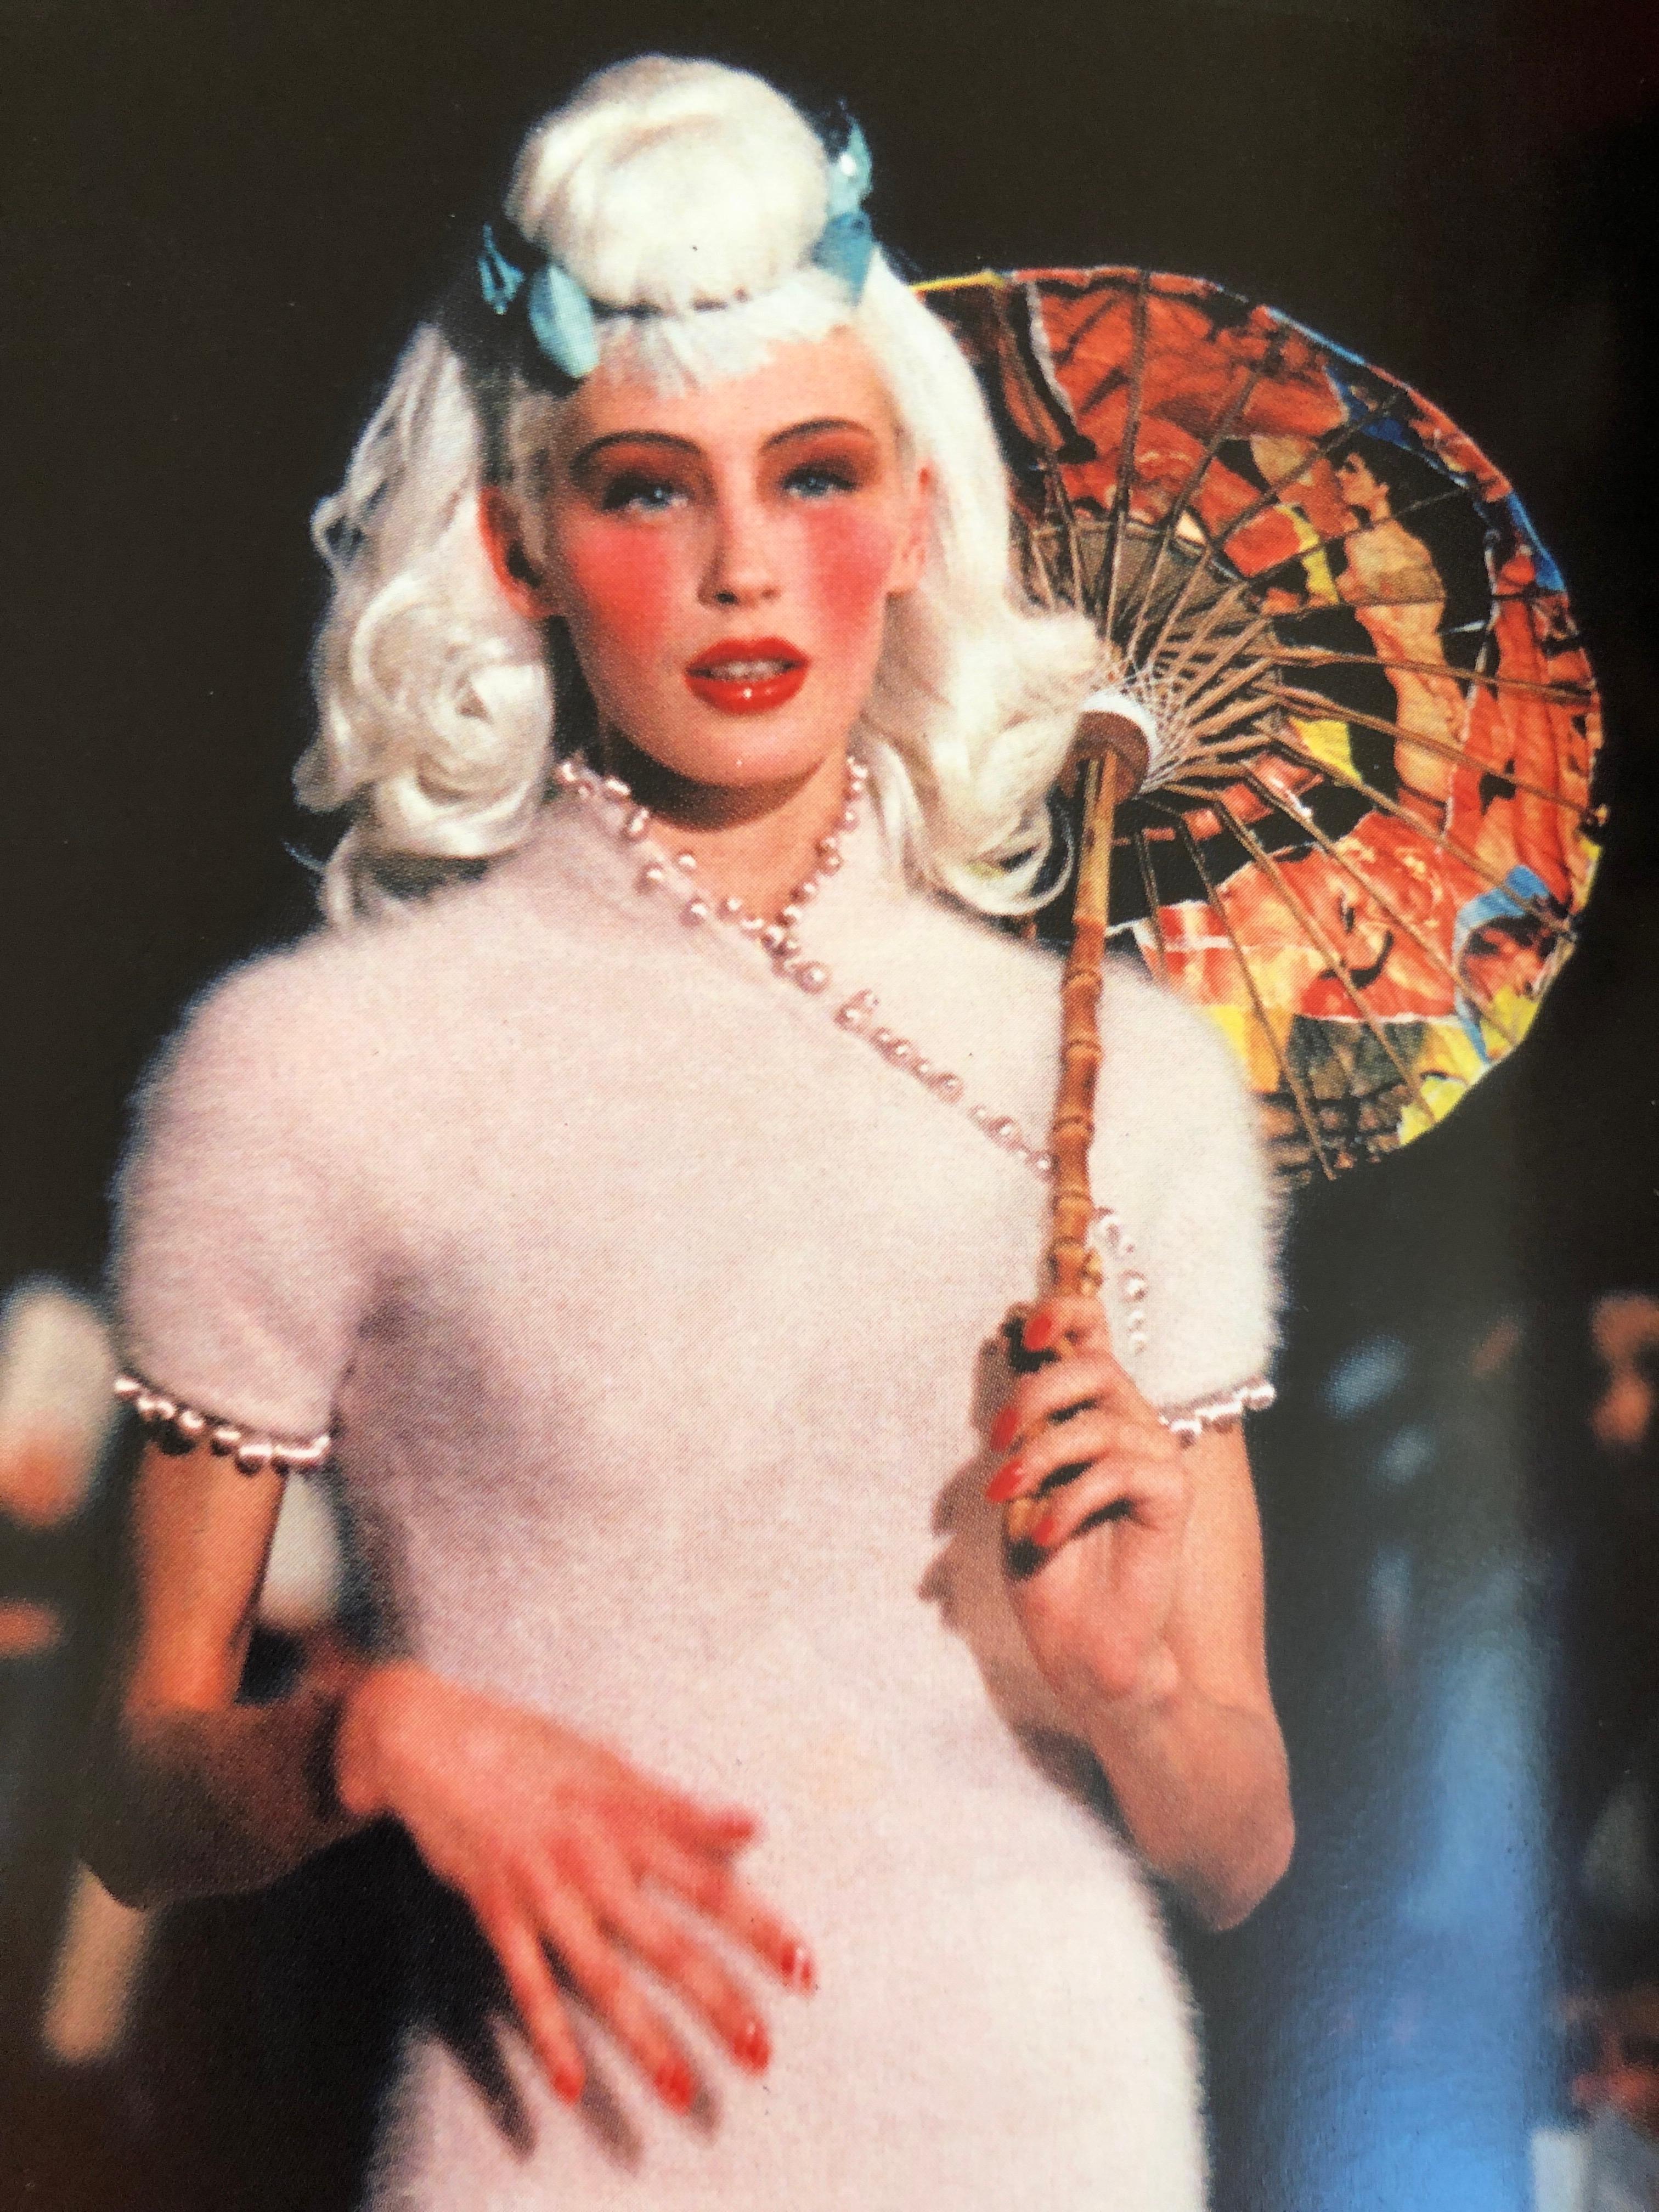 John Galliano's First Christian Dior Collection Fall 1997 Fuzzy Cheongsam Dress.
Called 